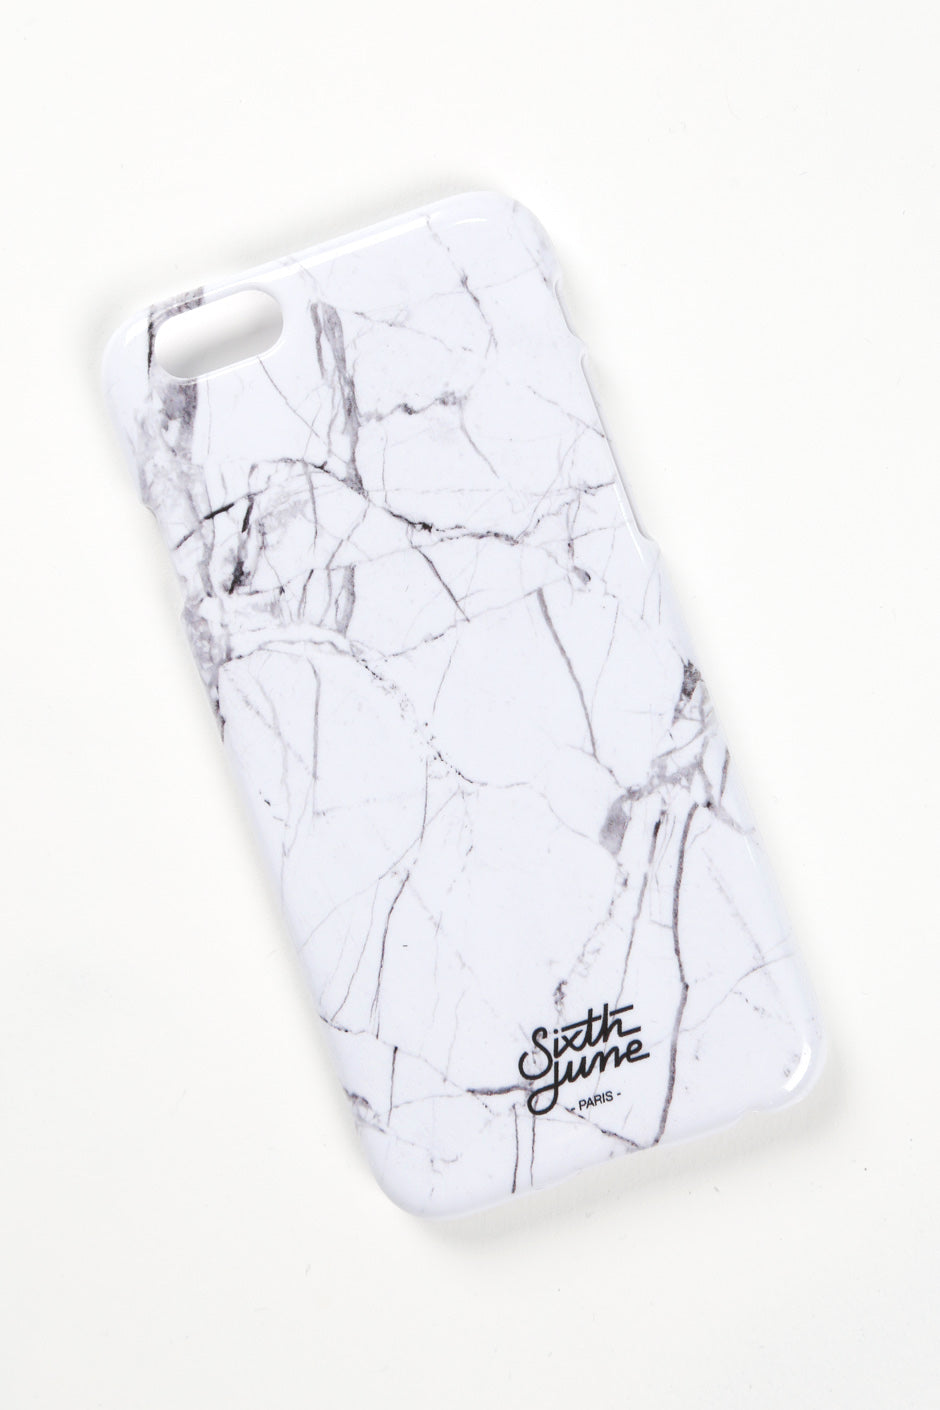 Sixth June - Coque iPhone 6 marbre blanc 1428A